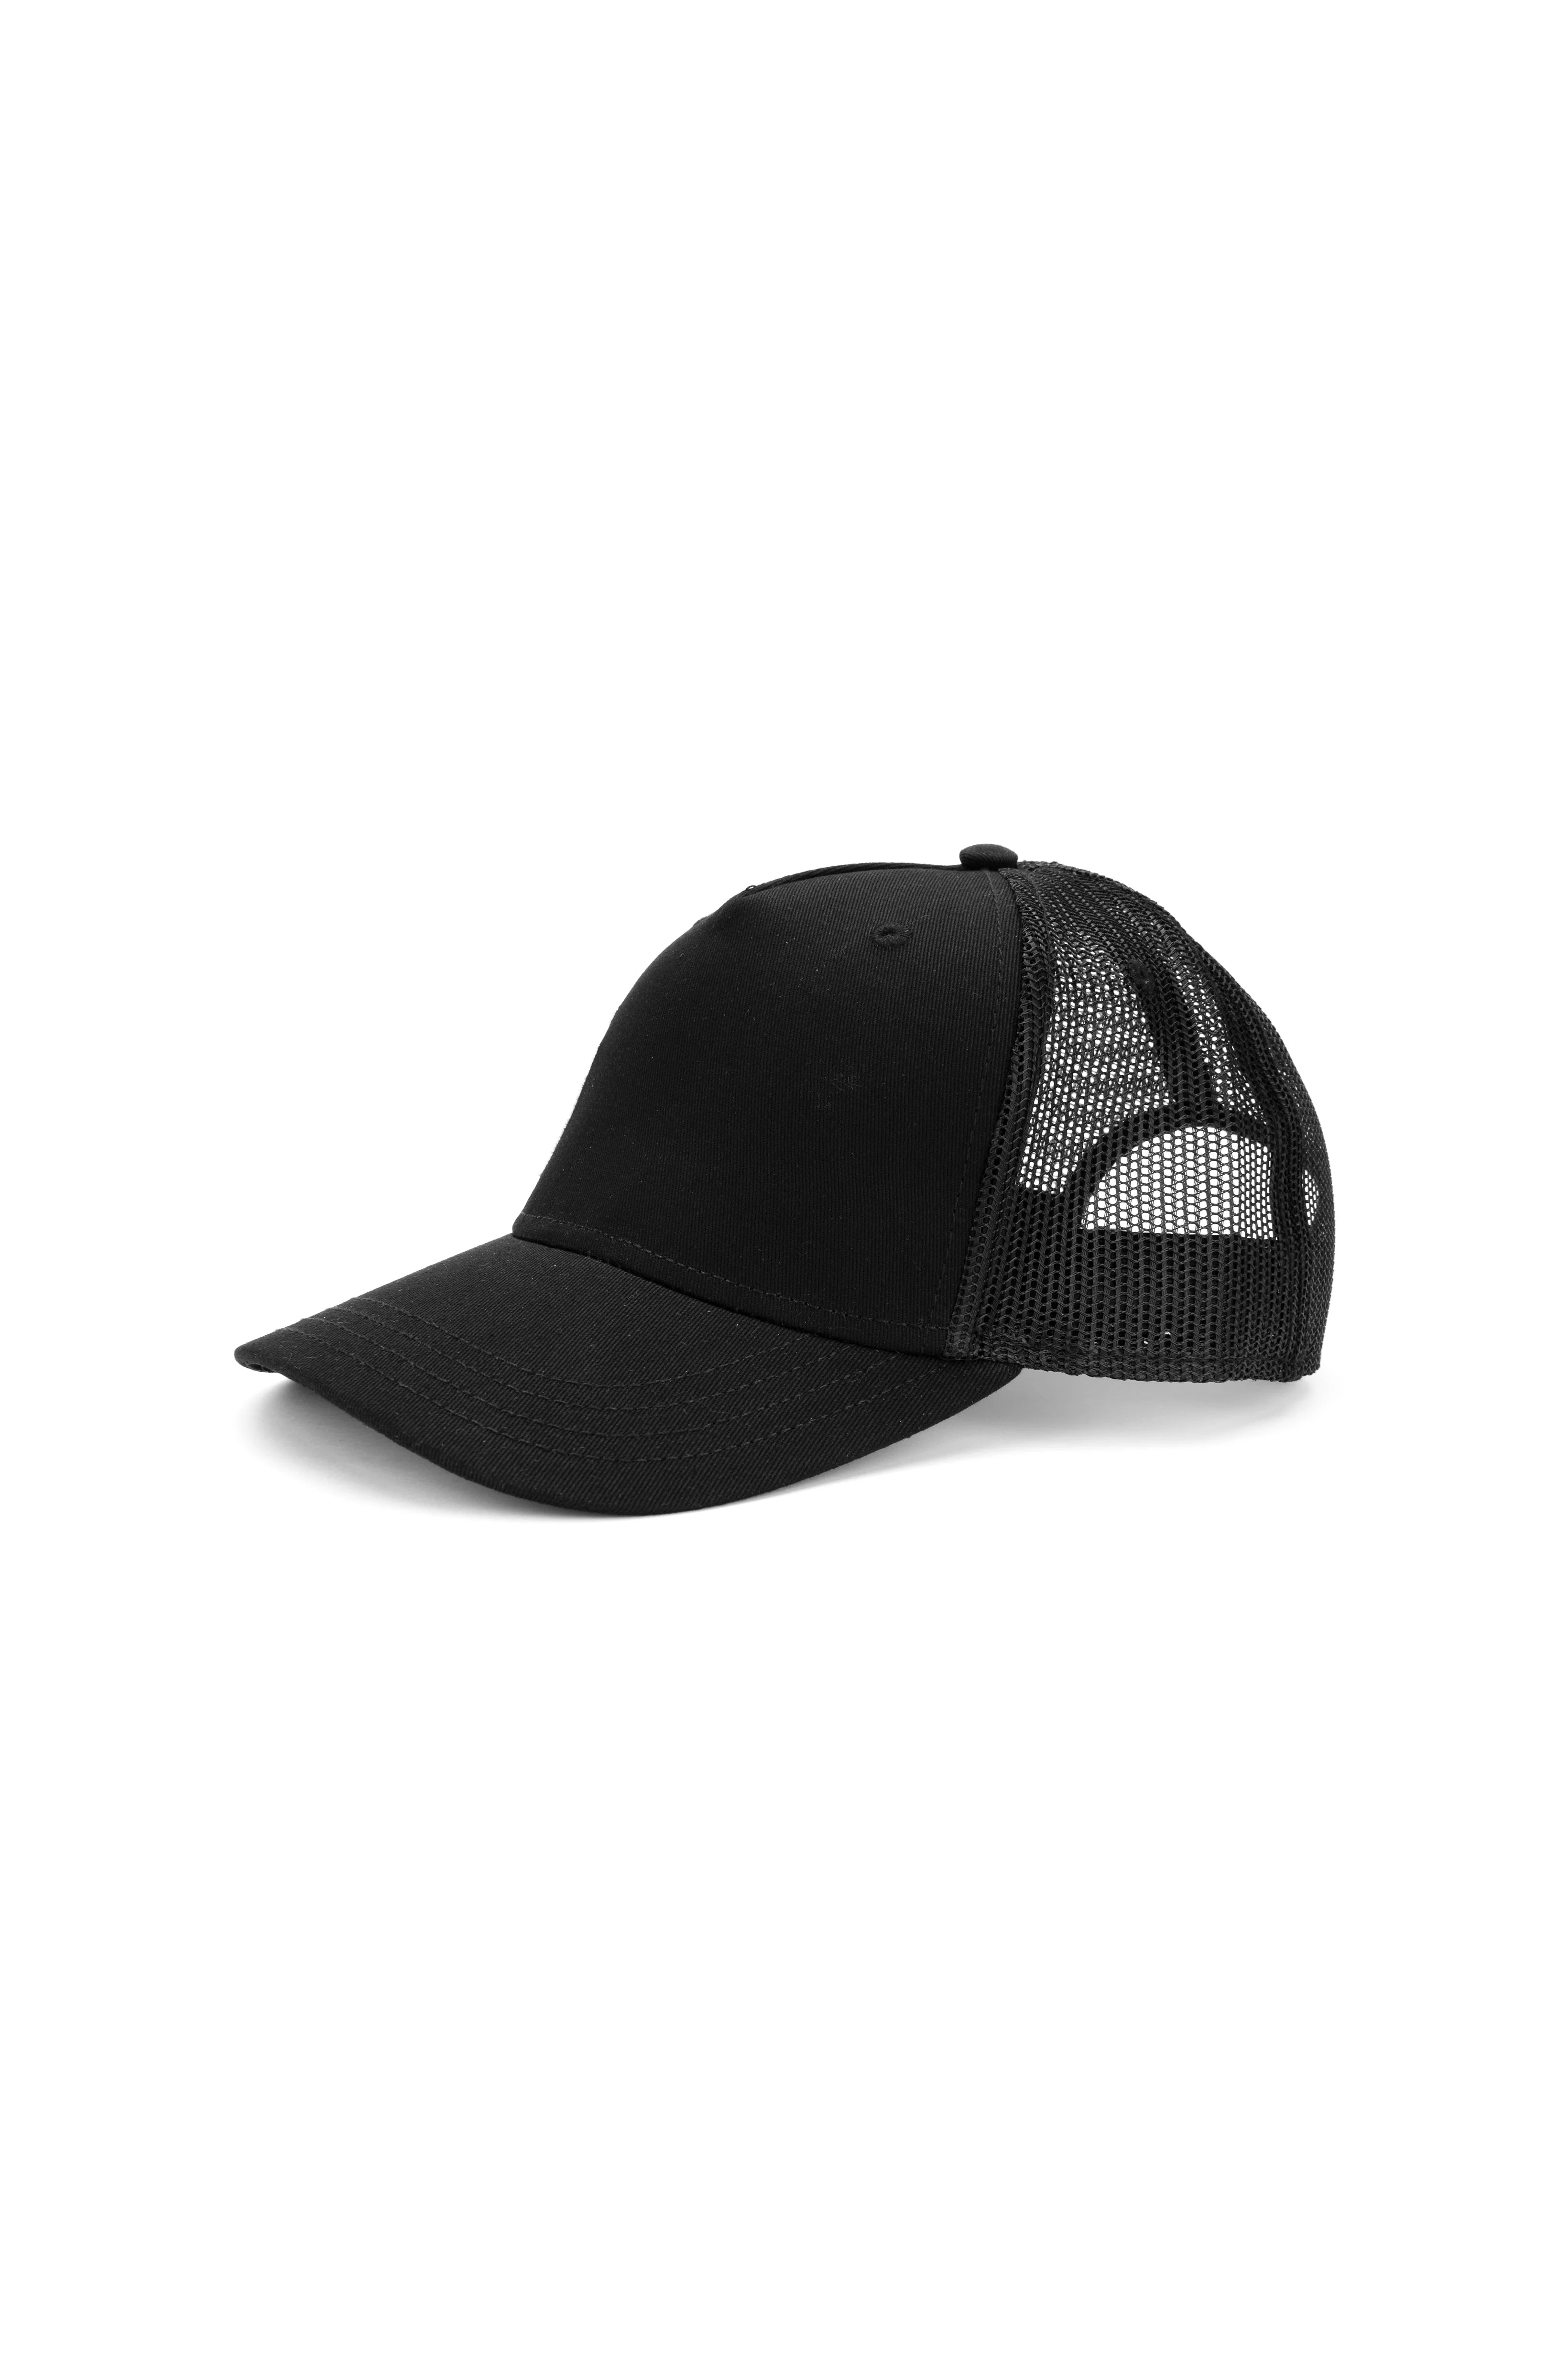 GORRO SITEIA BLACK CAP BLACK U